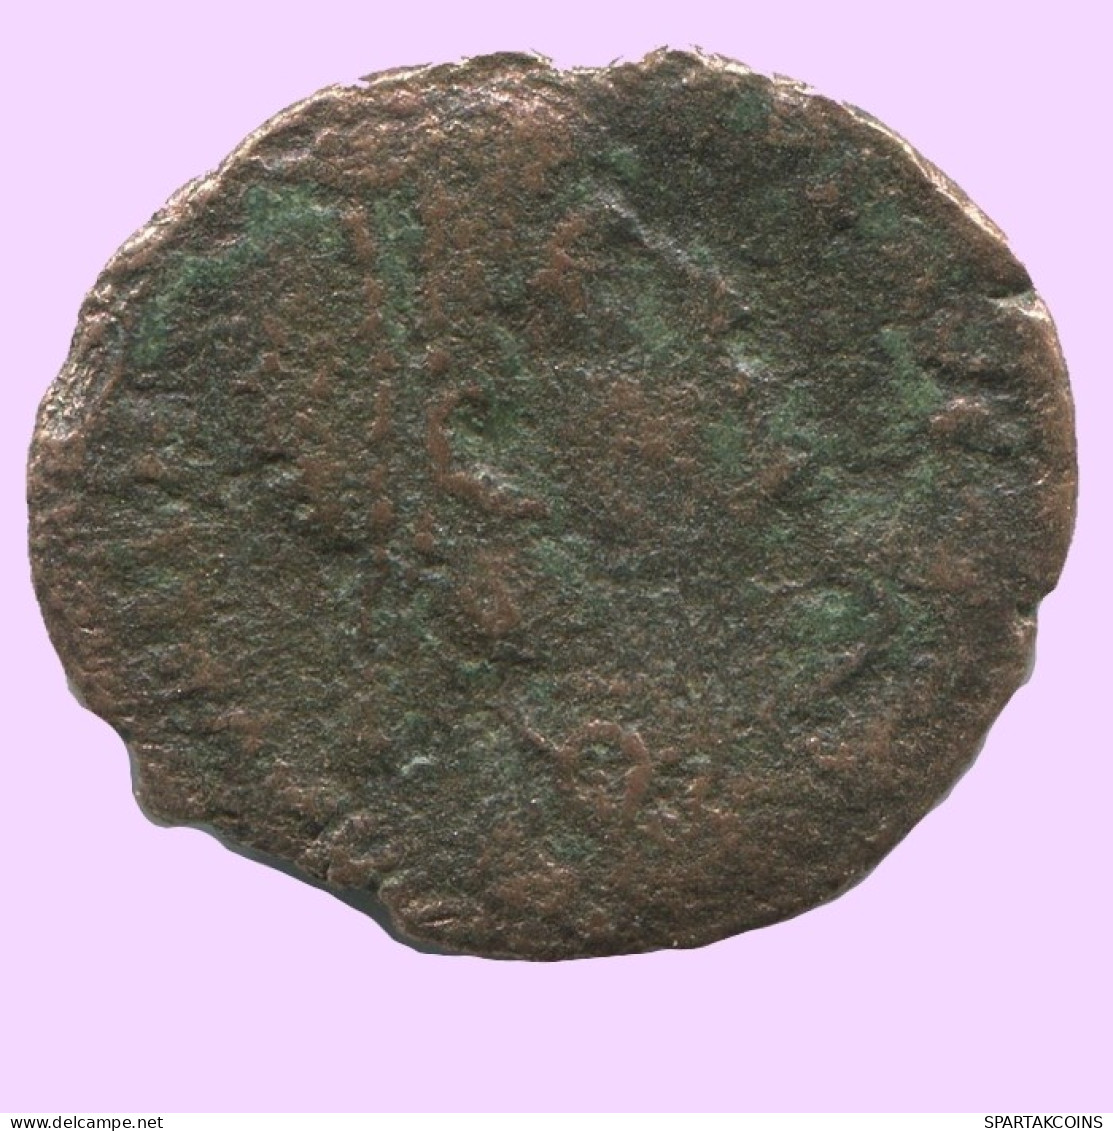 FOLLIS Antike Spätrömische Münze RÖMISCHE Münze 1.9g/18mm #ANT1985.7.D.A - El Bajo Imperio Romano (363 / 476)